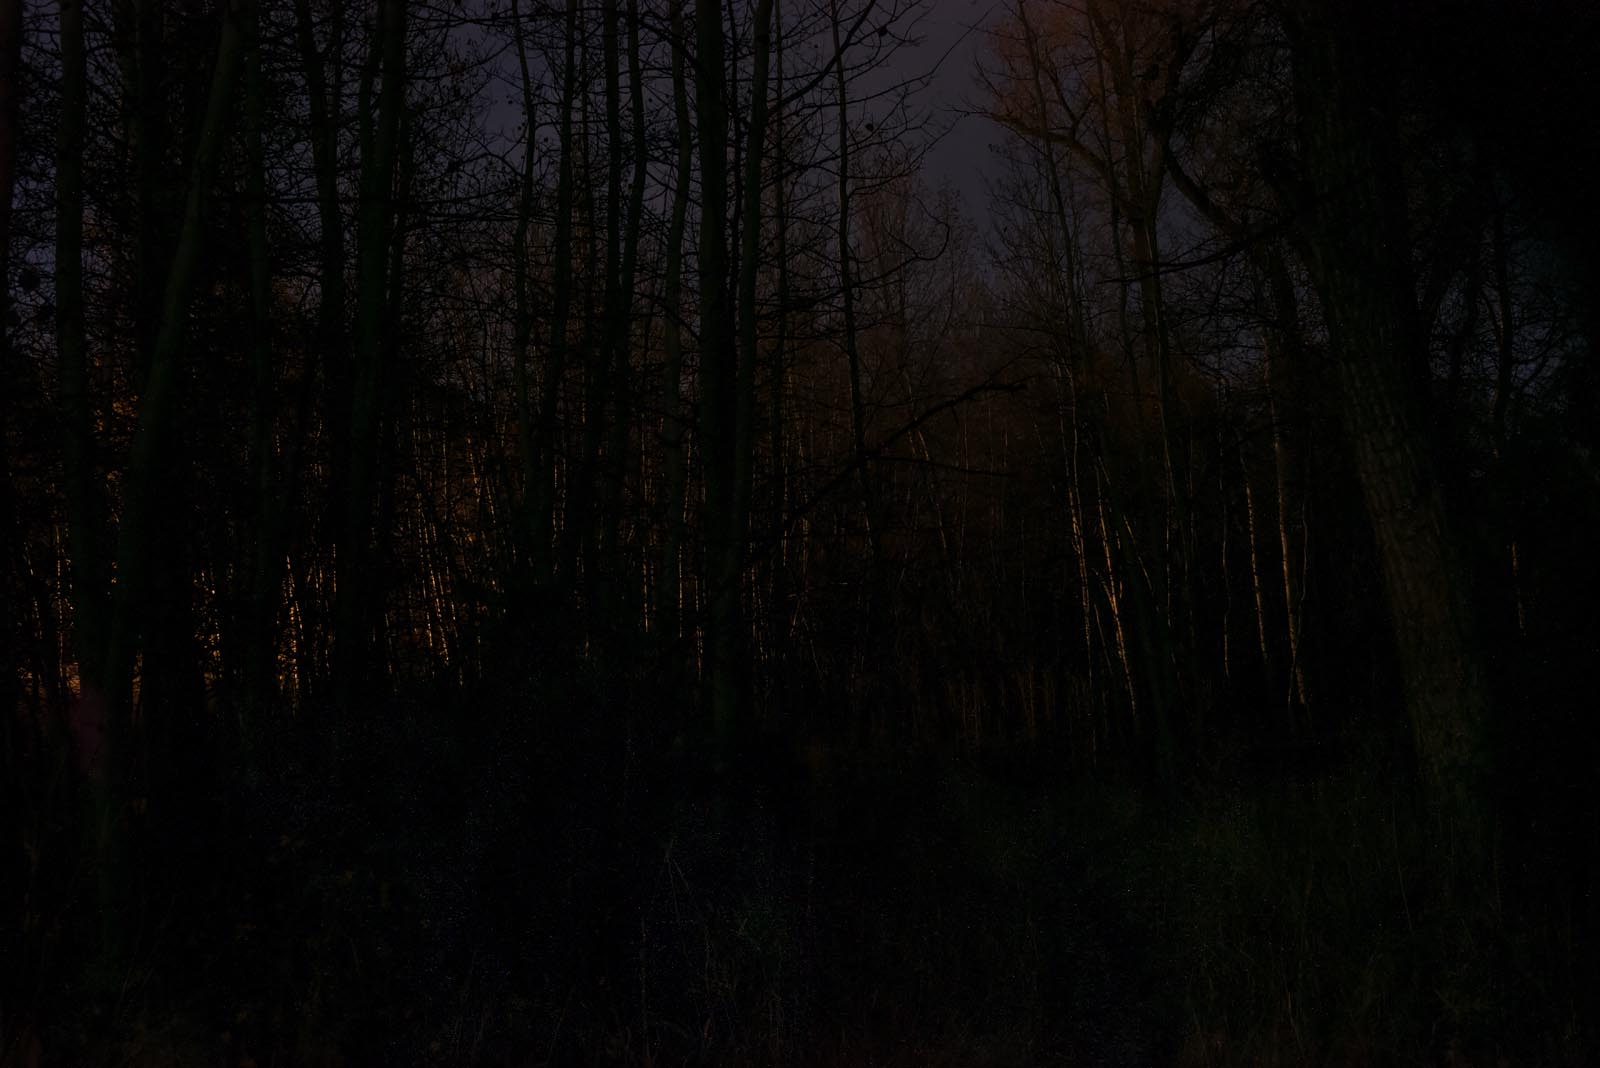 Lyrical Night Landscape Photographs: Forest Night